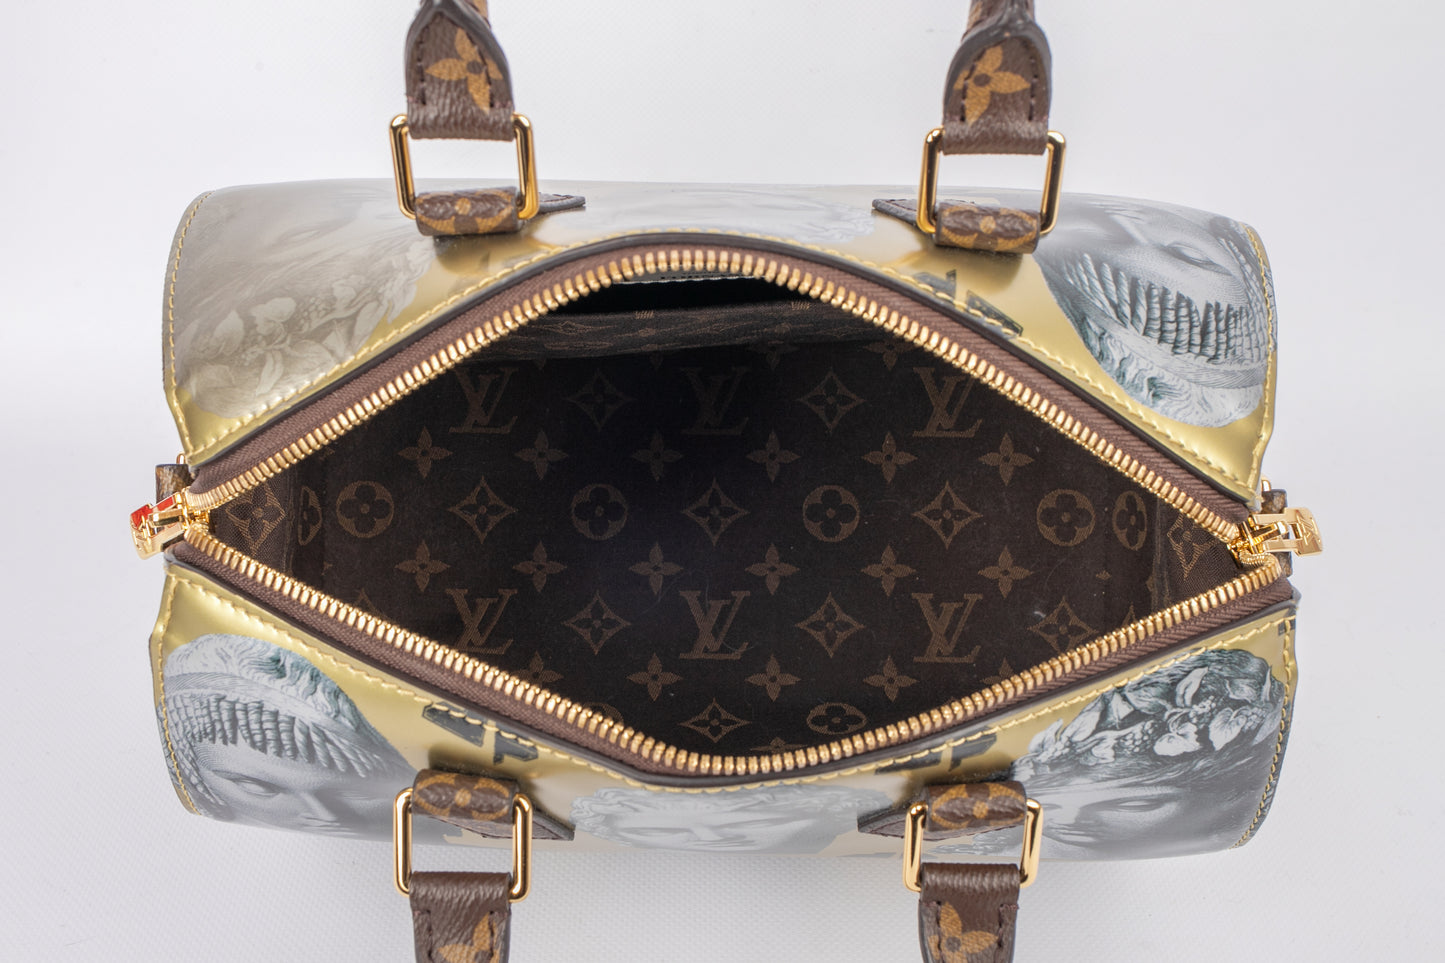 Sac Speedy Louis Vuitton x Fornasetti Limited Edition